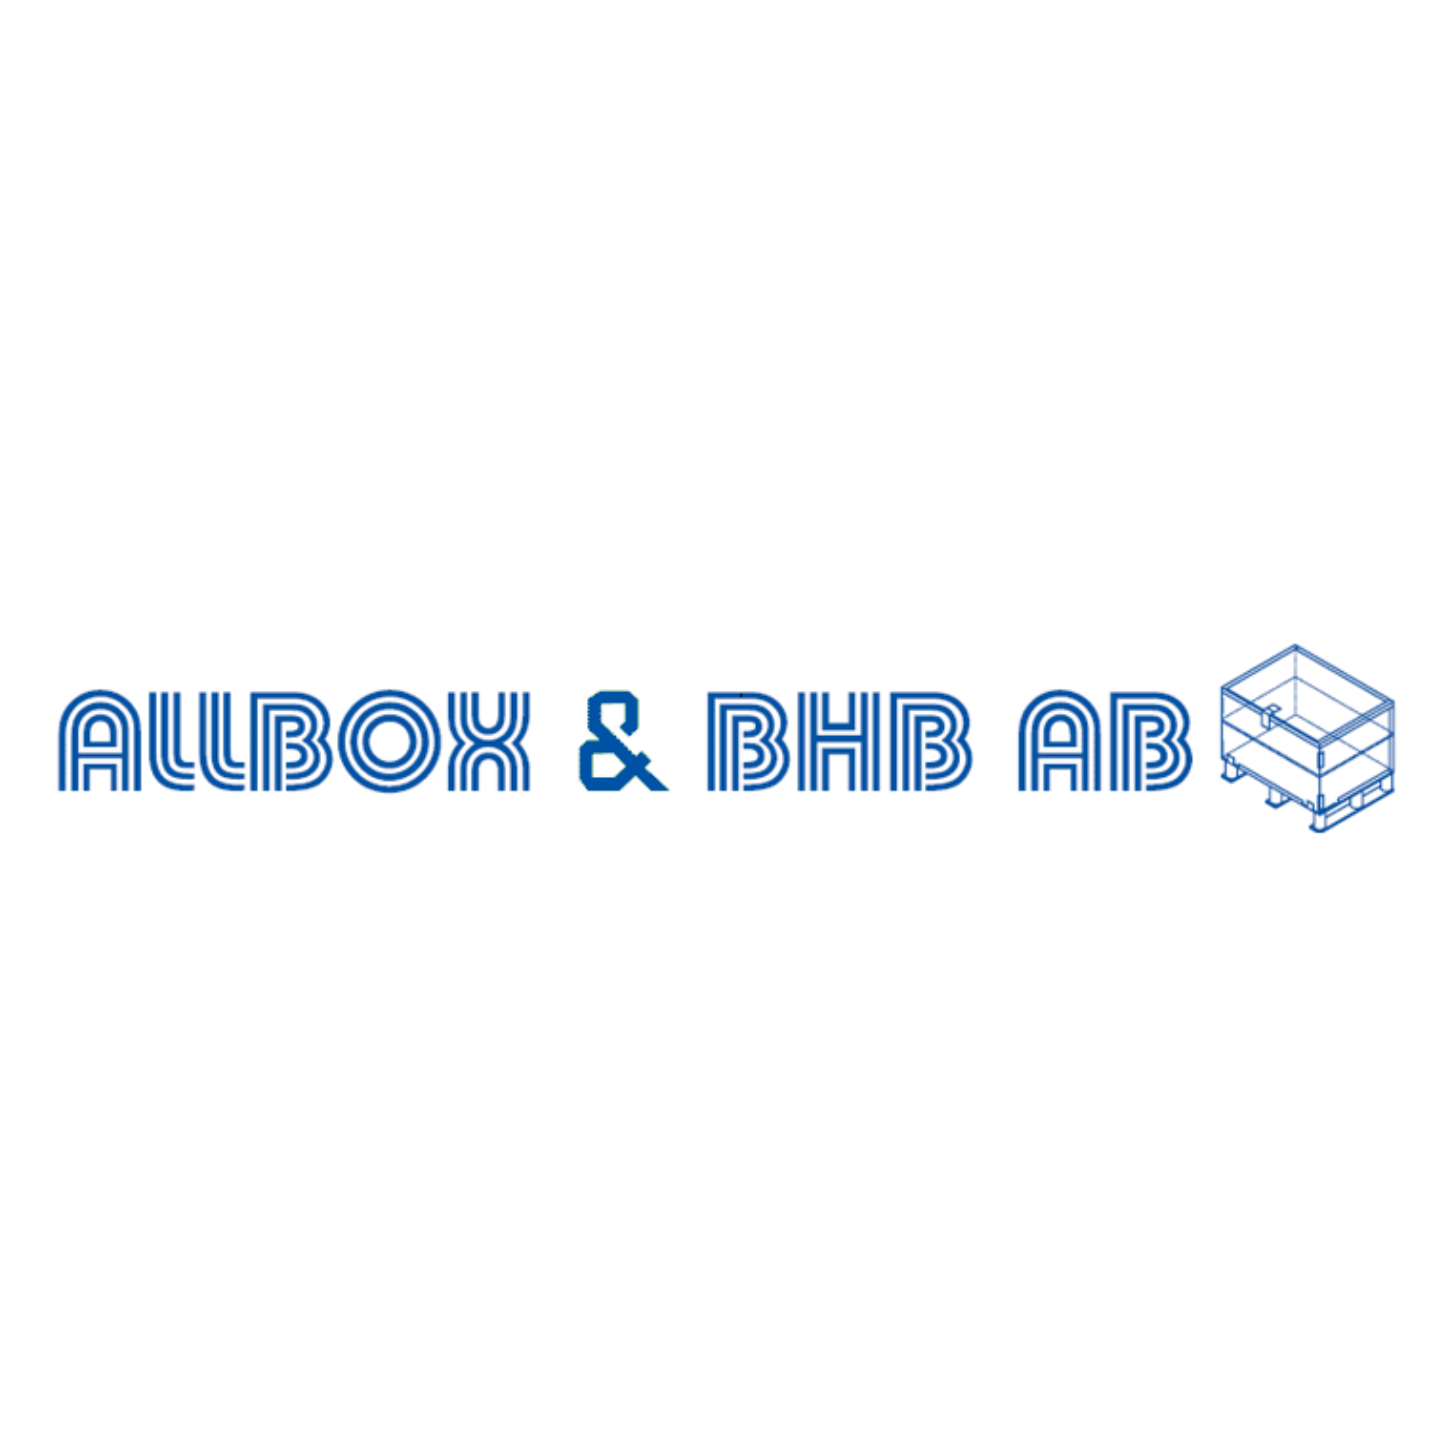 Allbox & BHB AB Logo